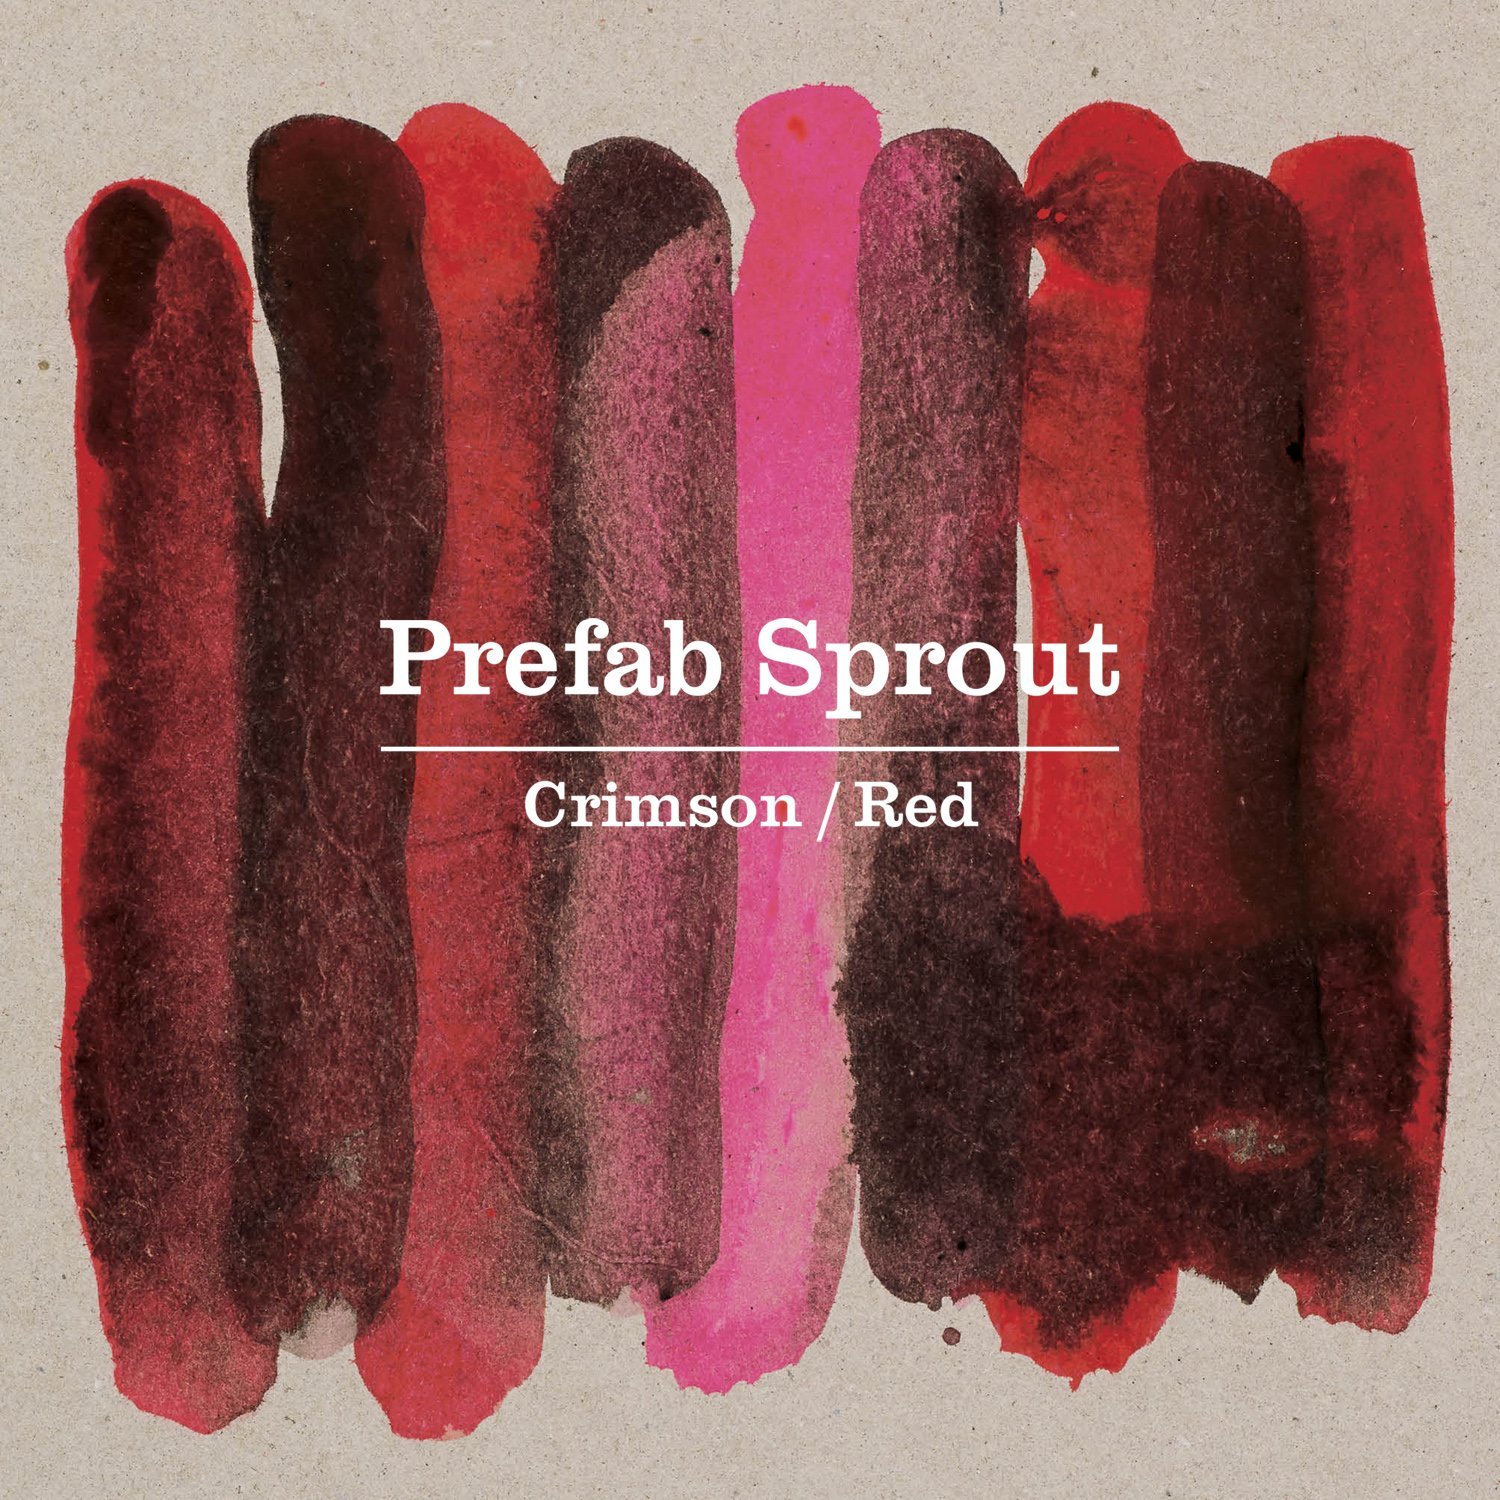 Prefab Sprout – Crimson/Red